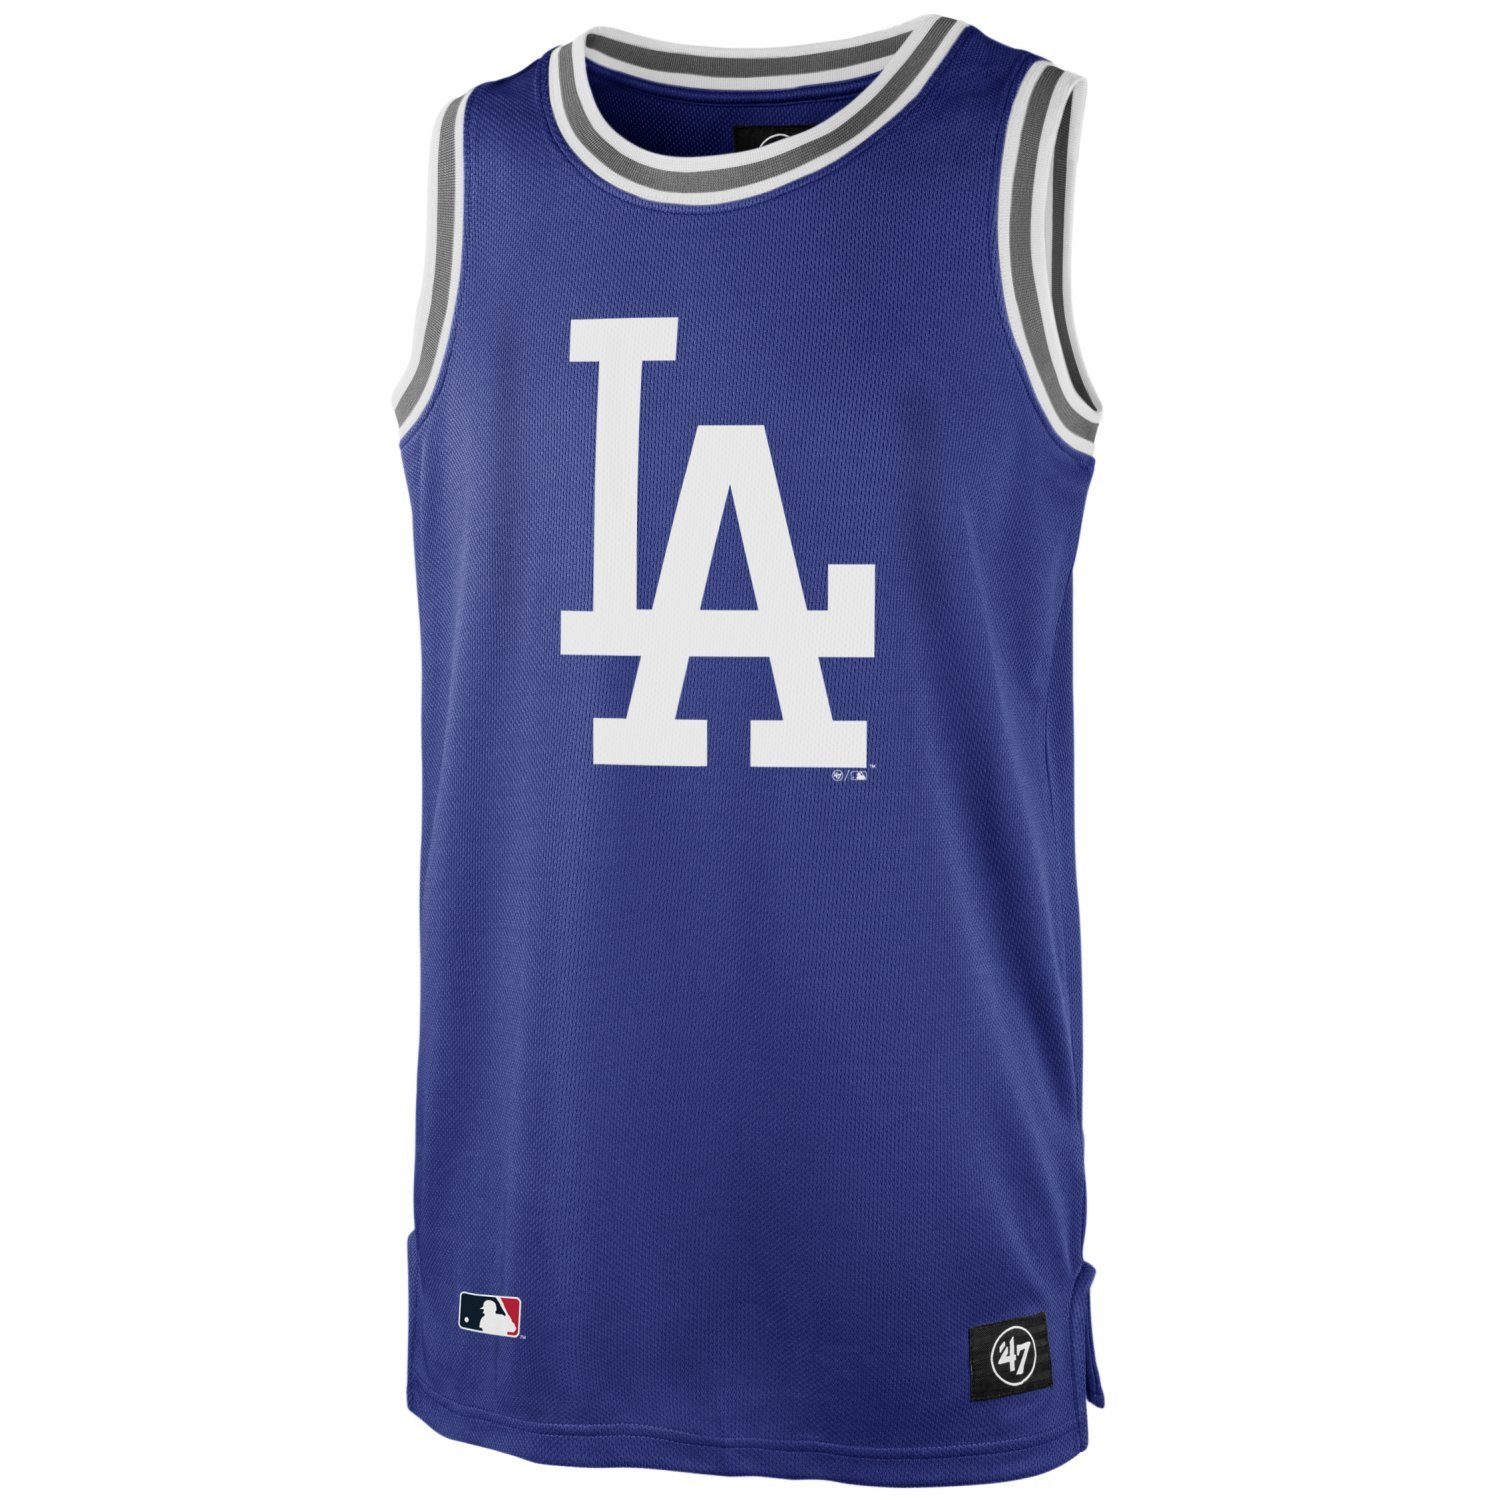 '47 Brand Muskelshirt MLB GRAFTON Los Angeles Dodgers | Shirts